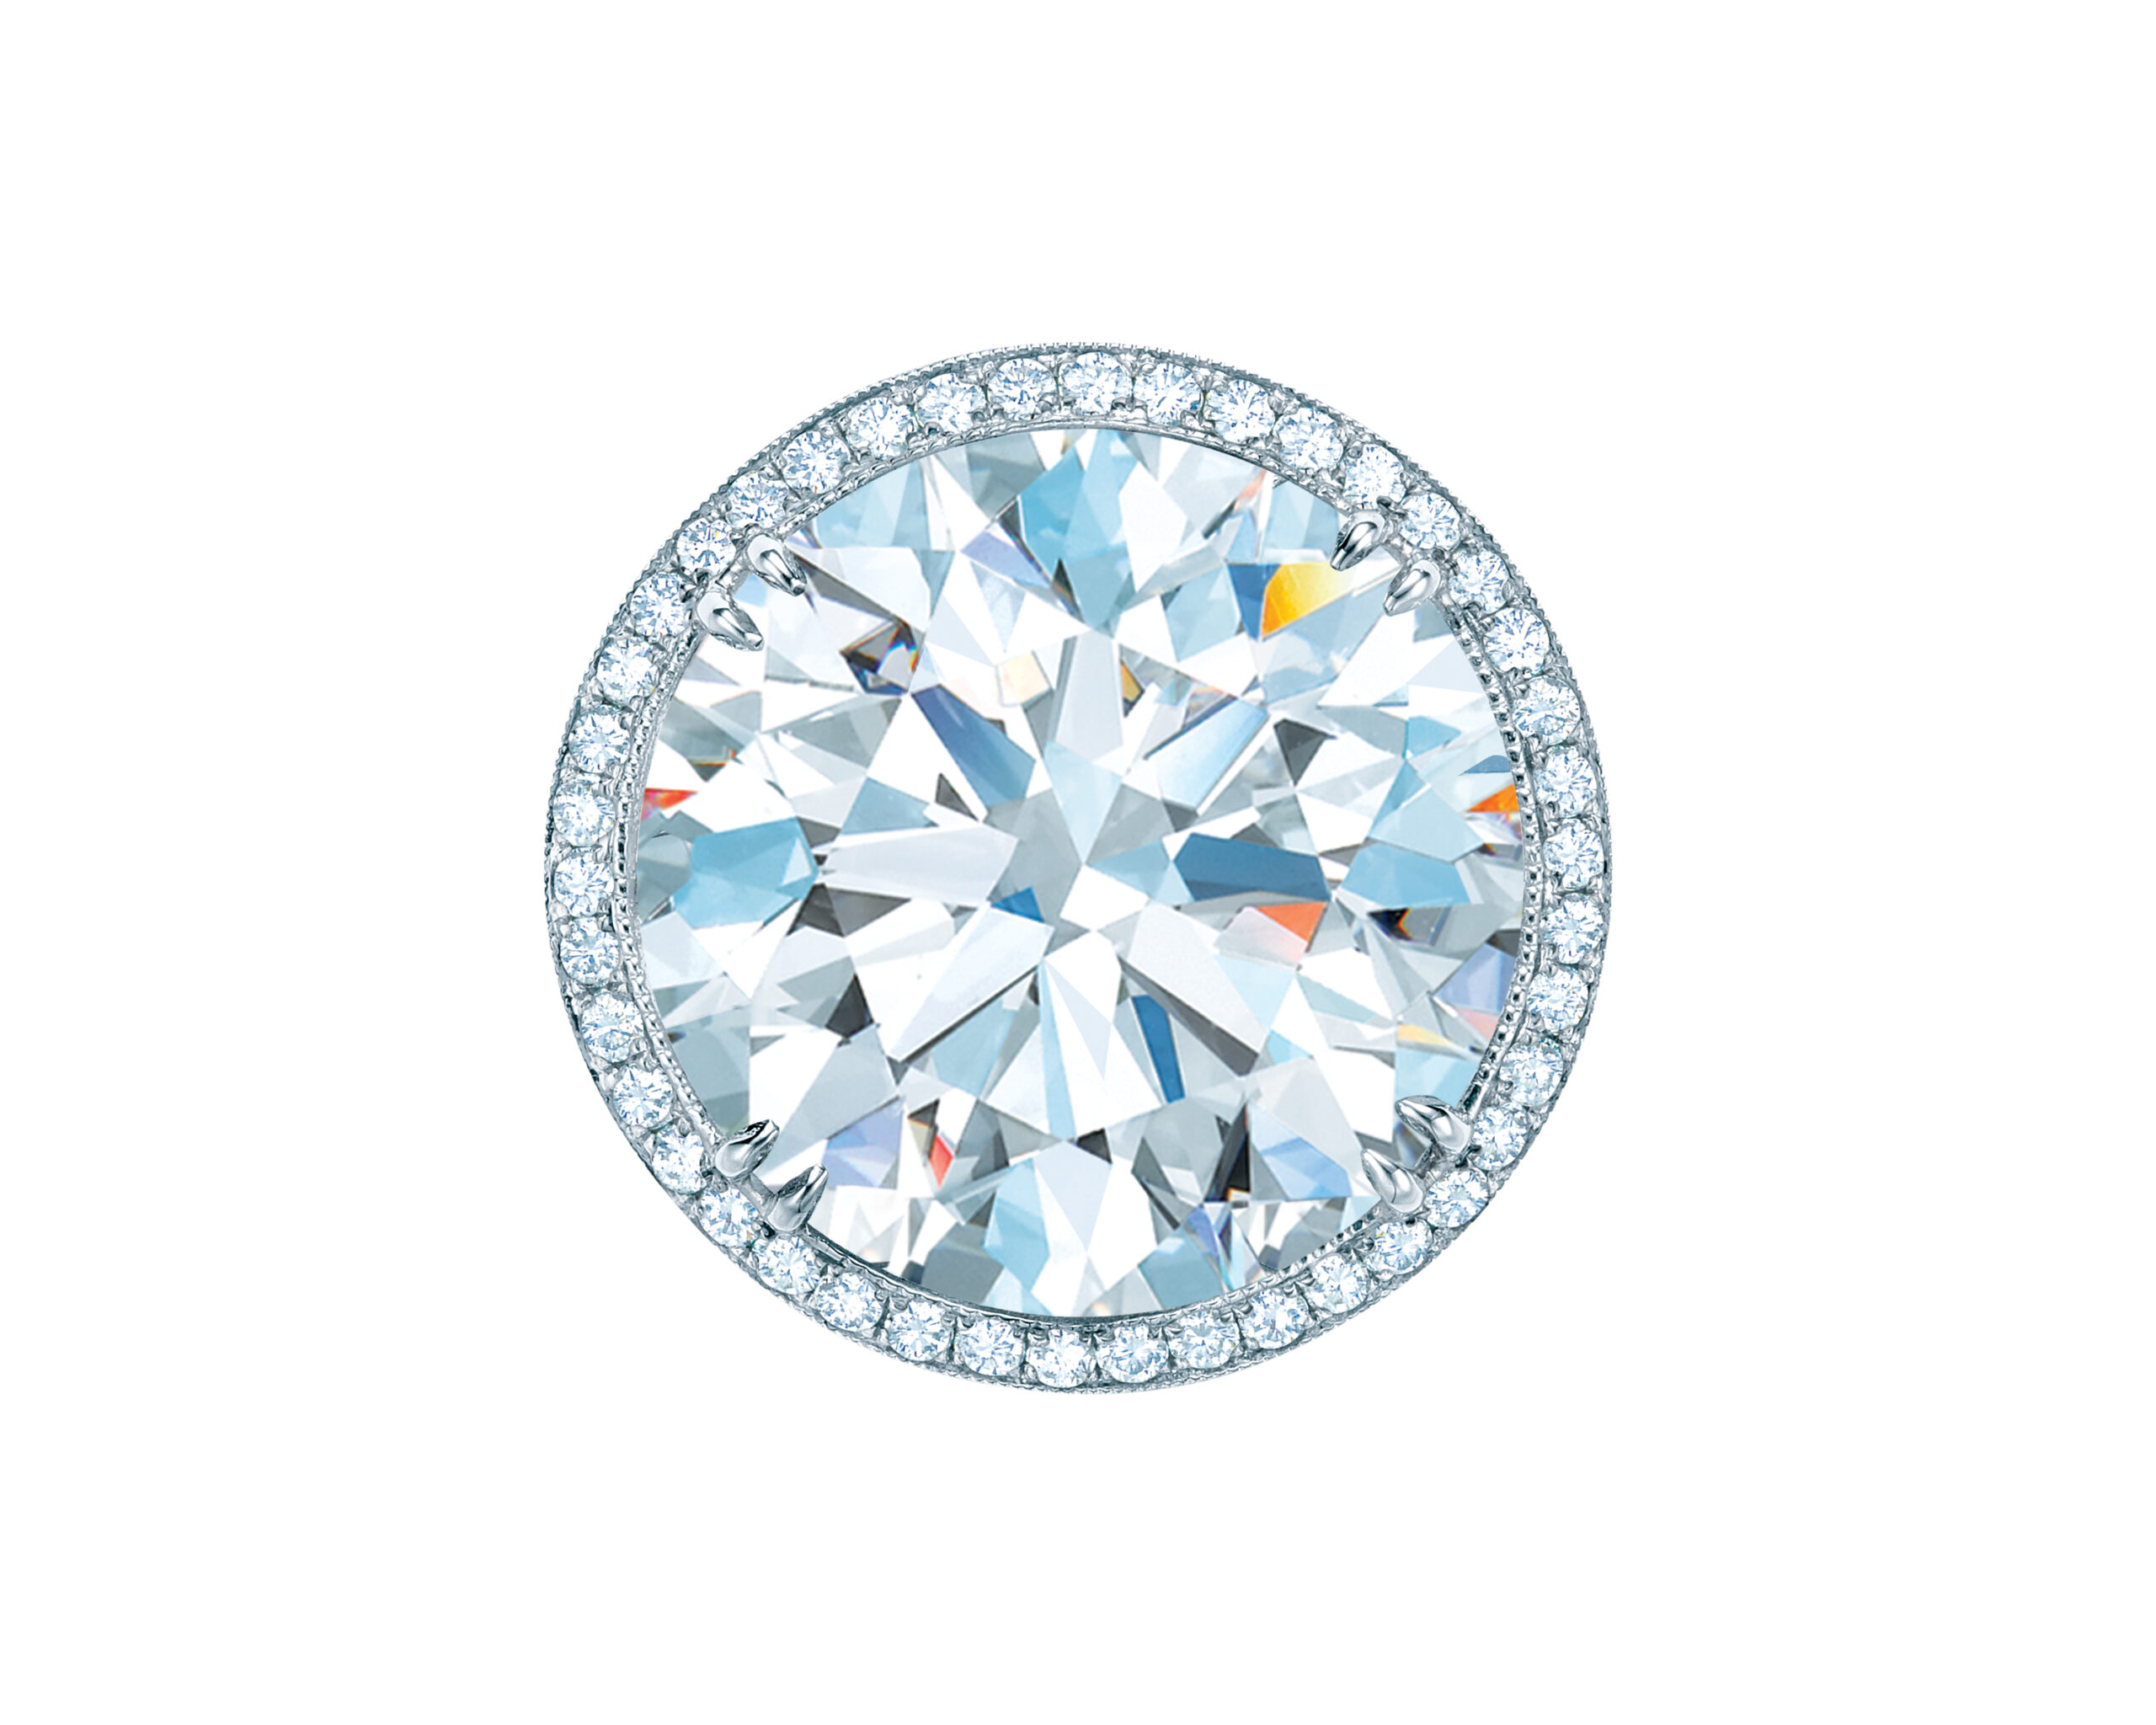 Tiffany round brilliant diamond ring in a diamond and platinum setting